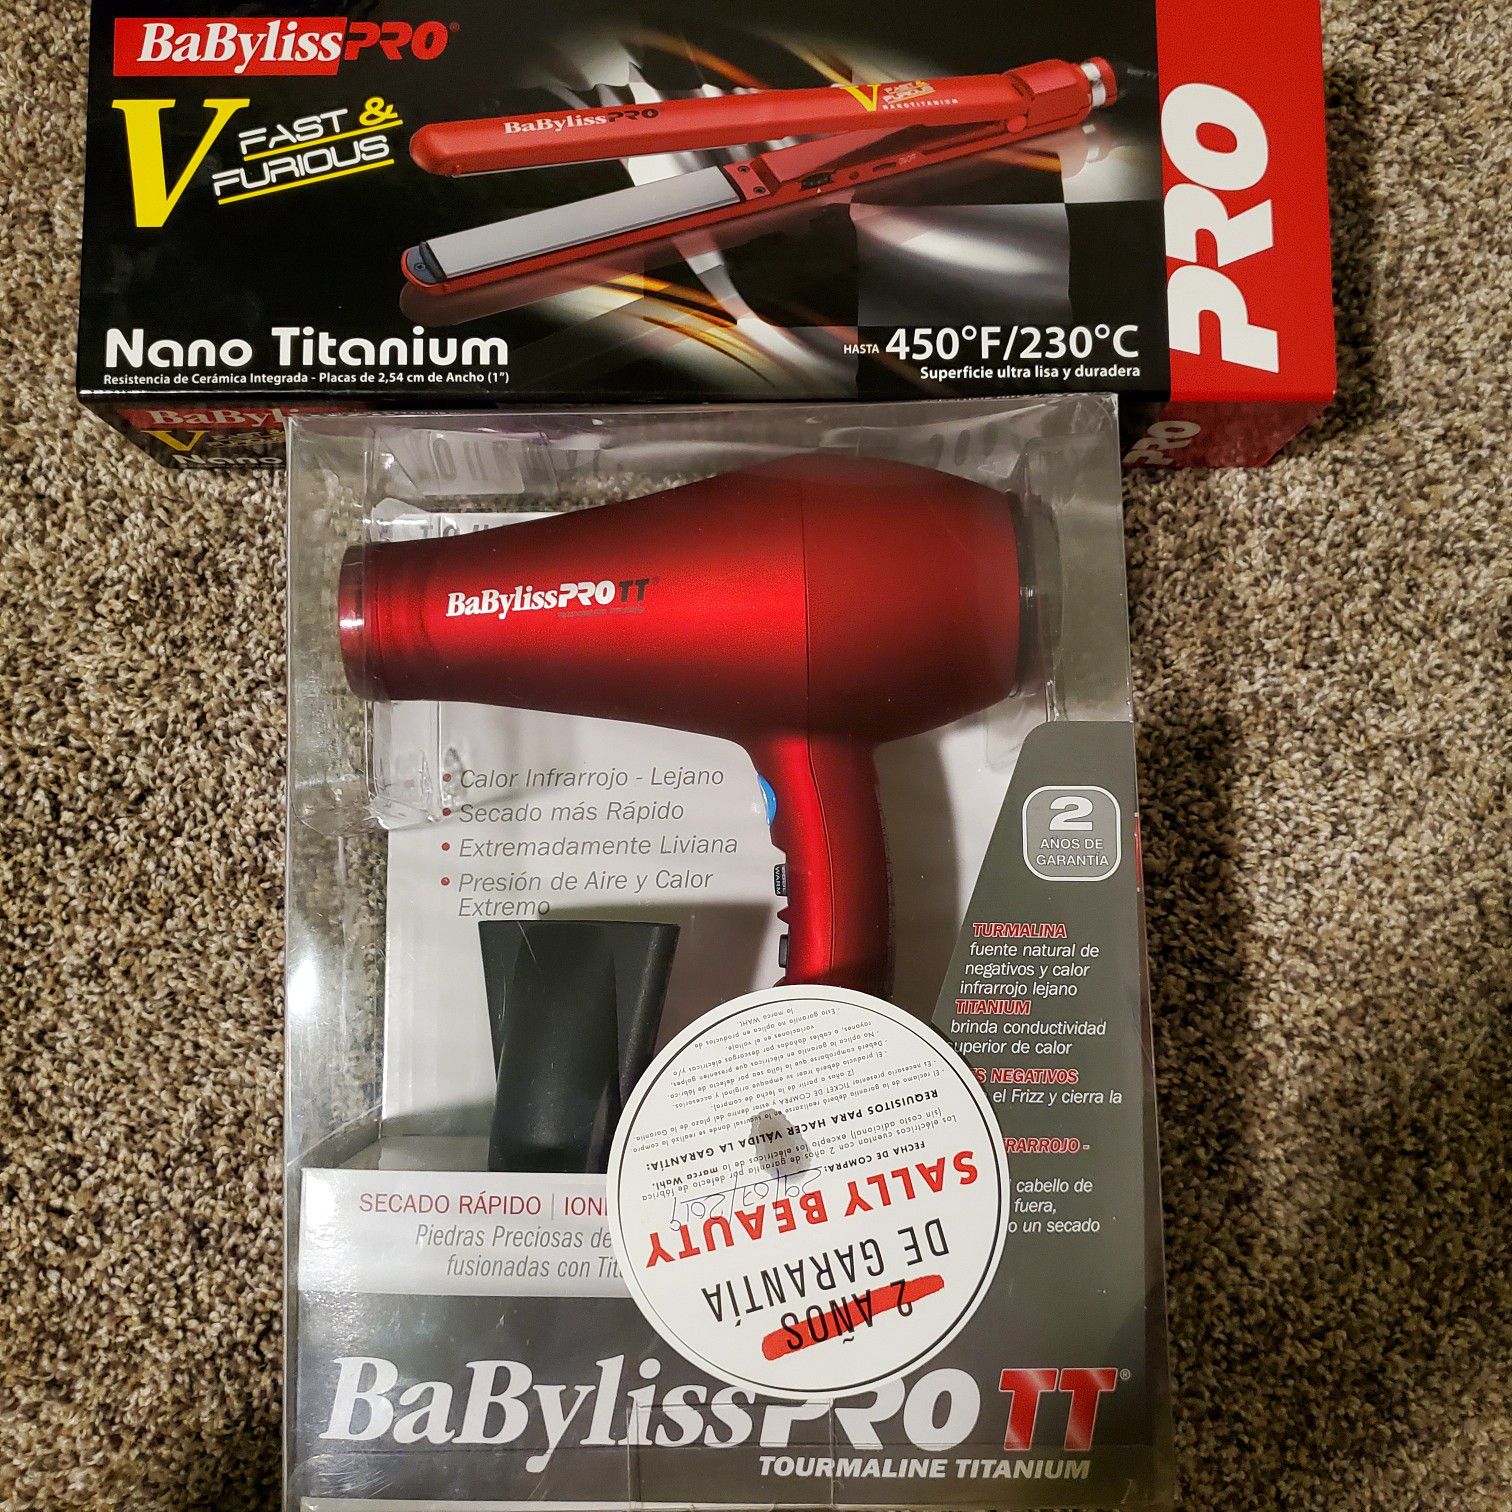 Hair dryer and flat iron straightener Babyliss PRO